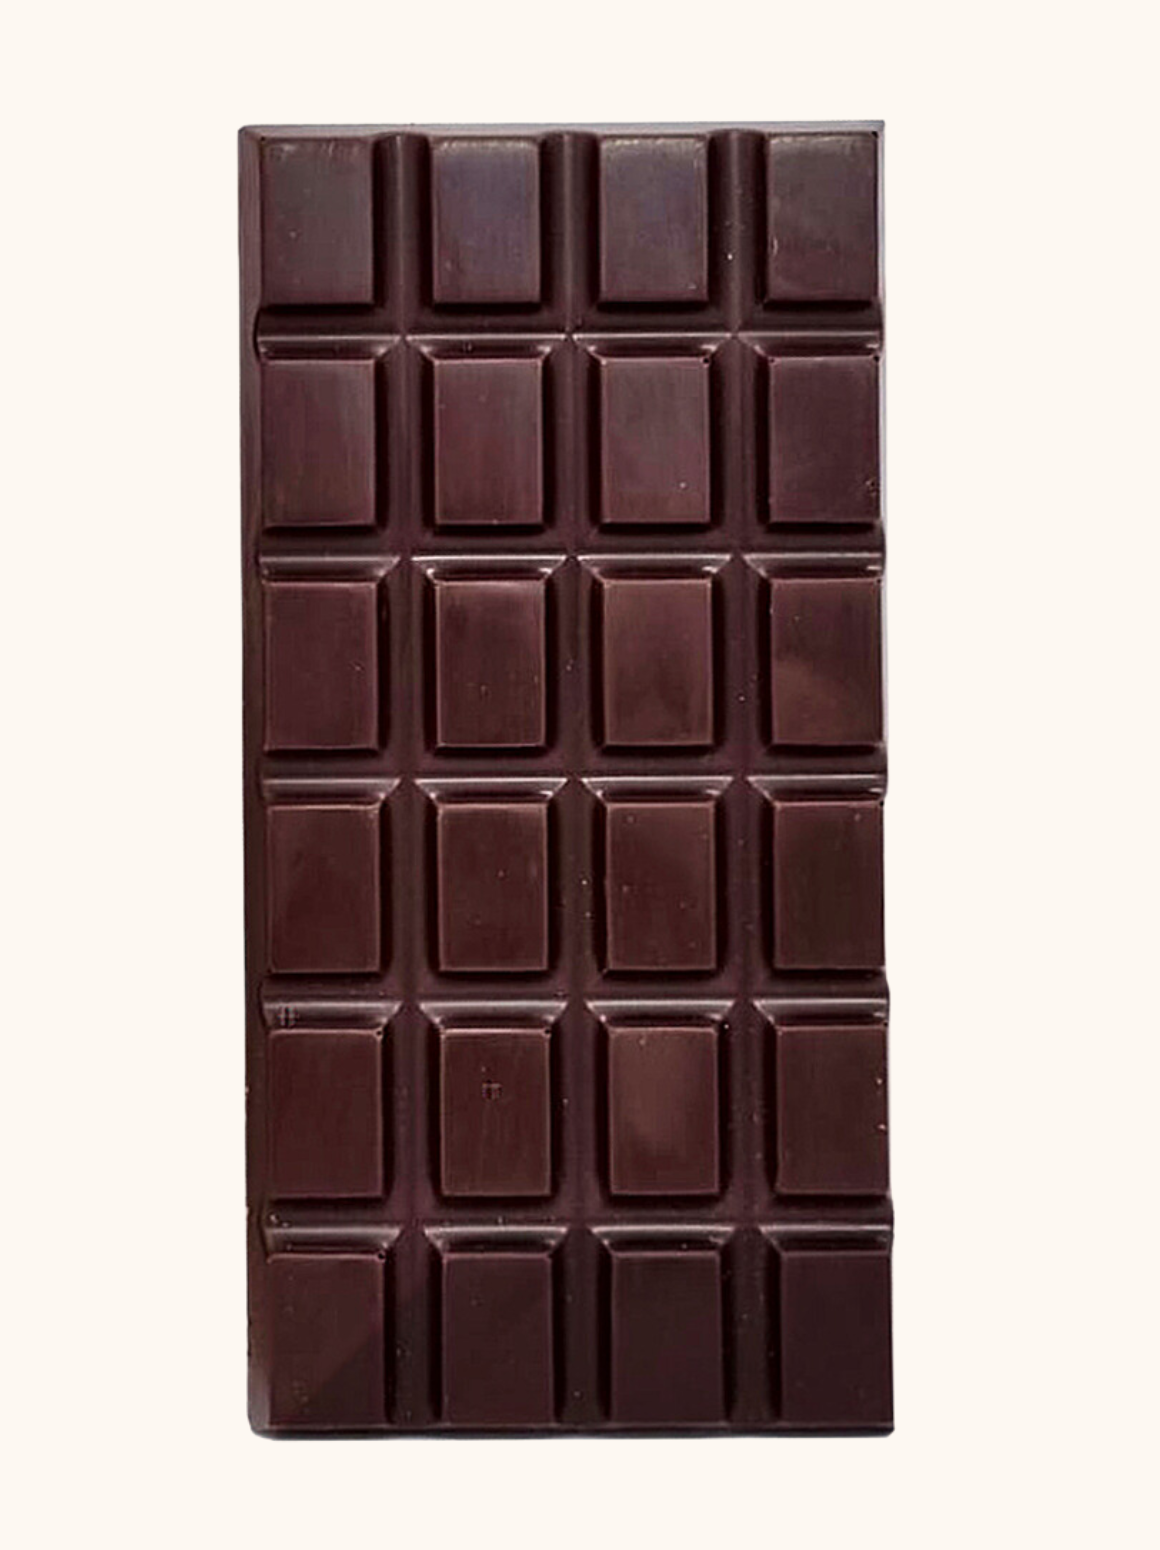 Chocolat noir Intense, Fondant & CBD